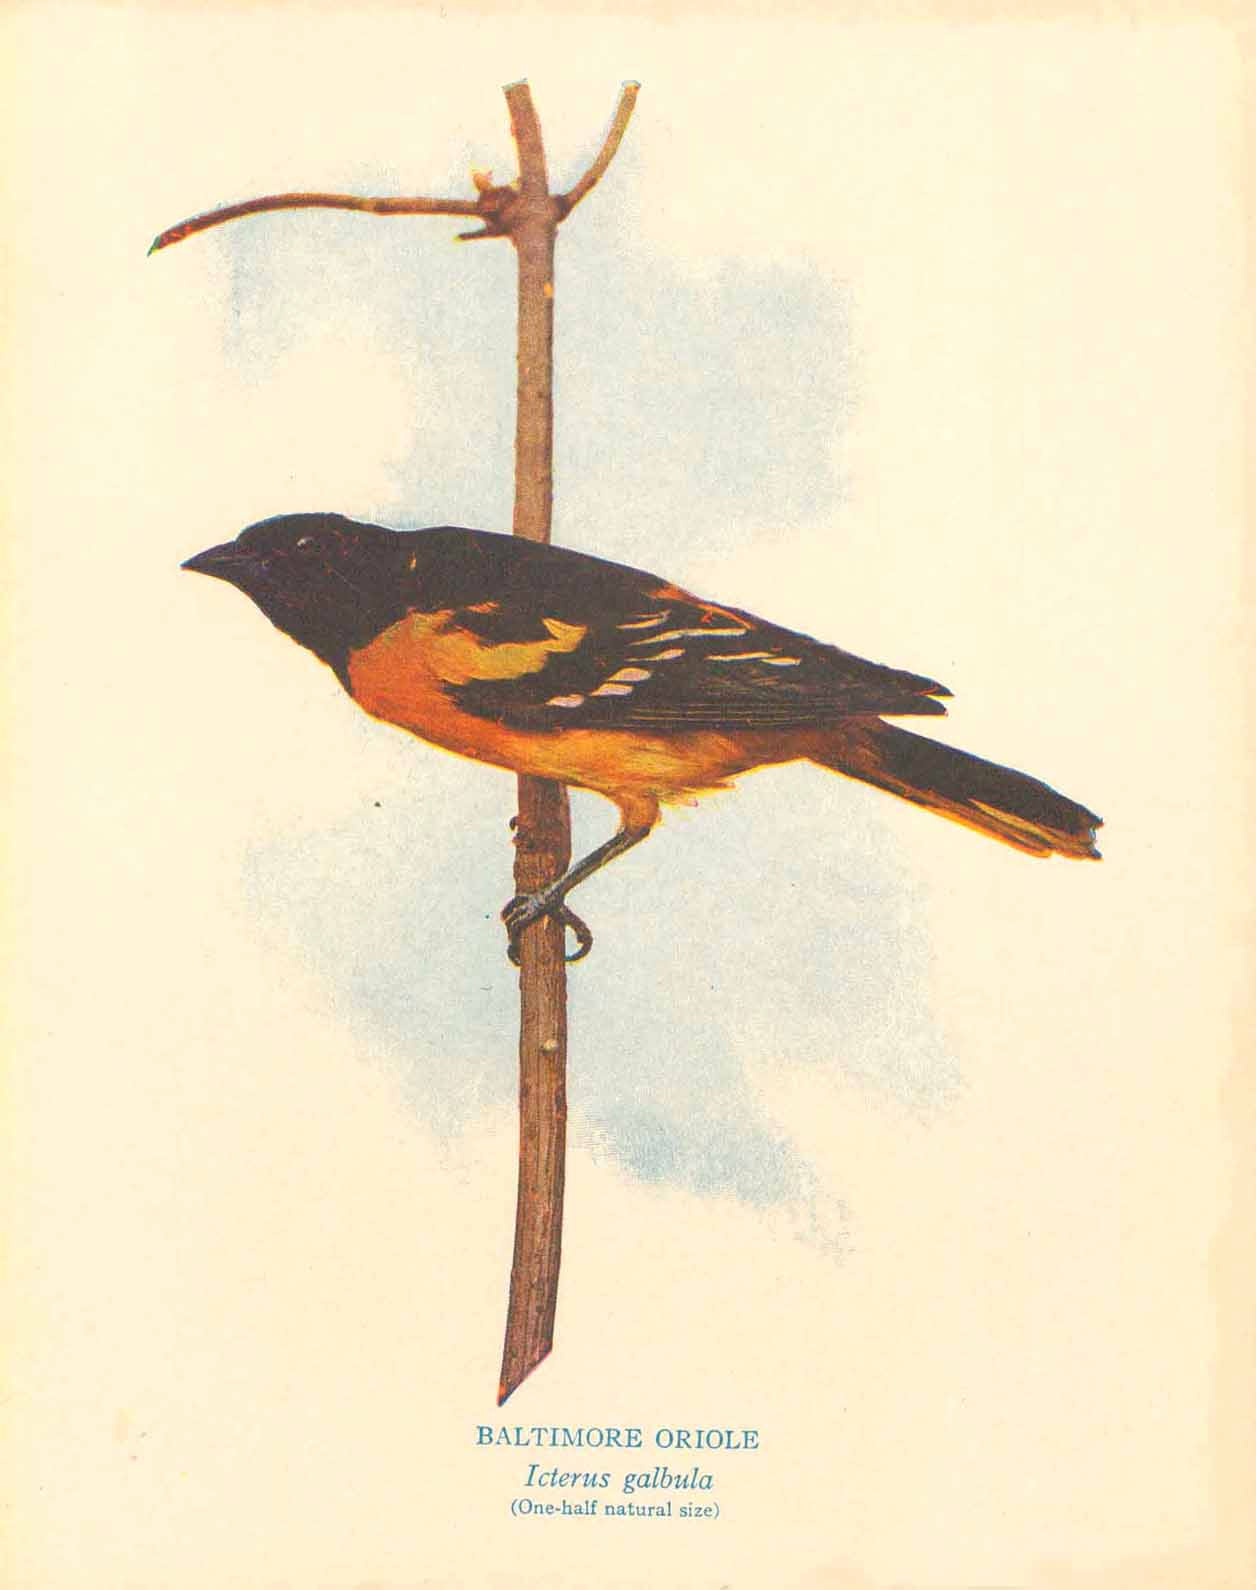 Antique print of a bird, "Baltimore Oriole" "Icterus glbula" (One-Half natural size)  Wood engraving printed in color ca 1890.  Original antique print  